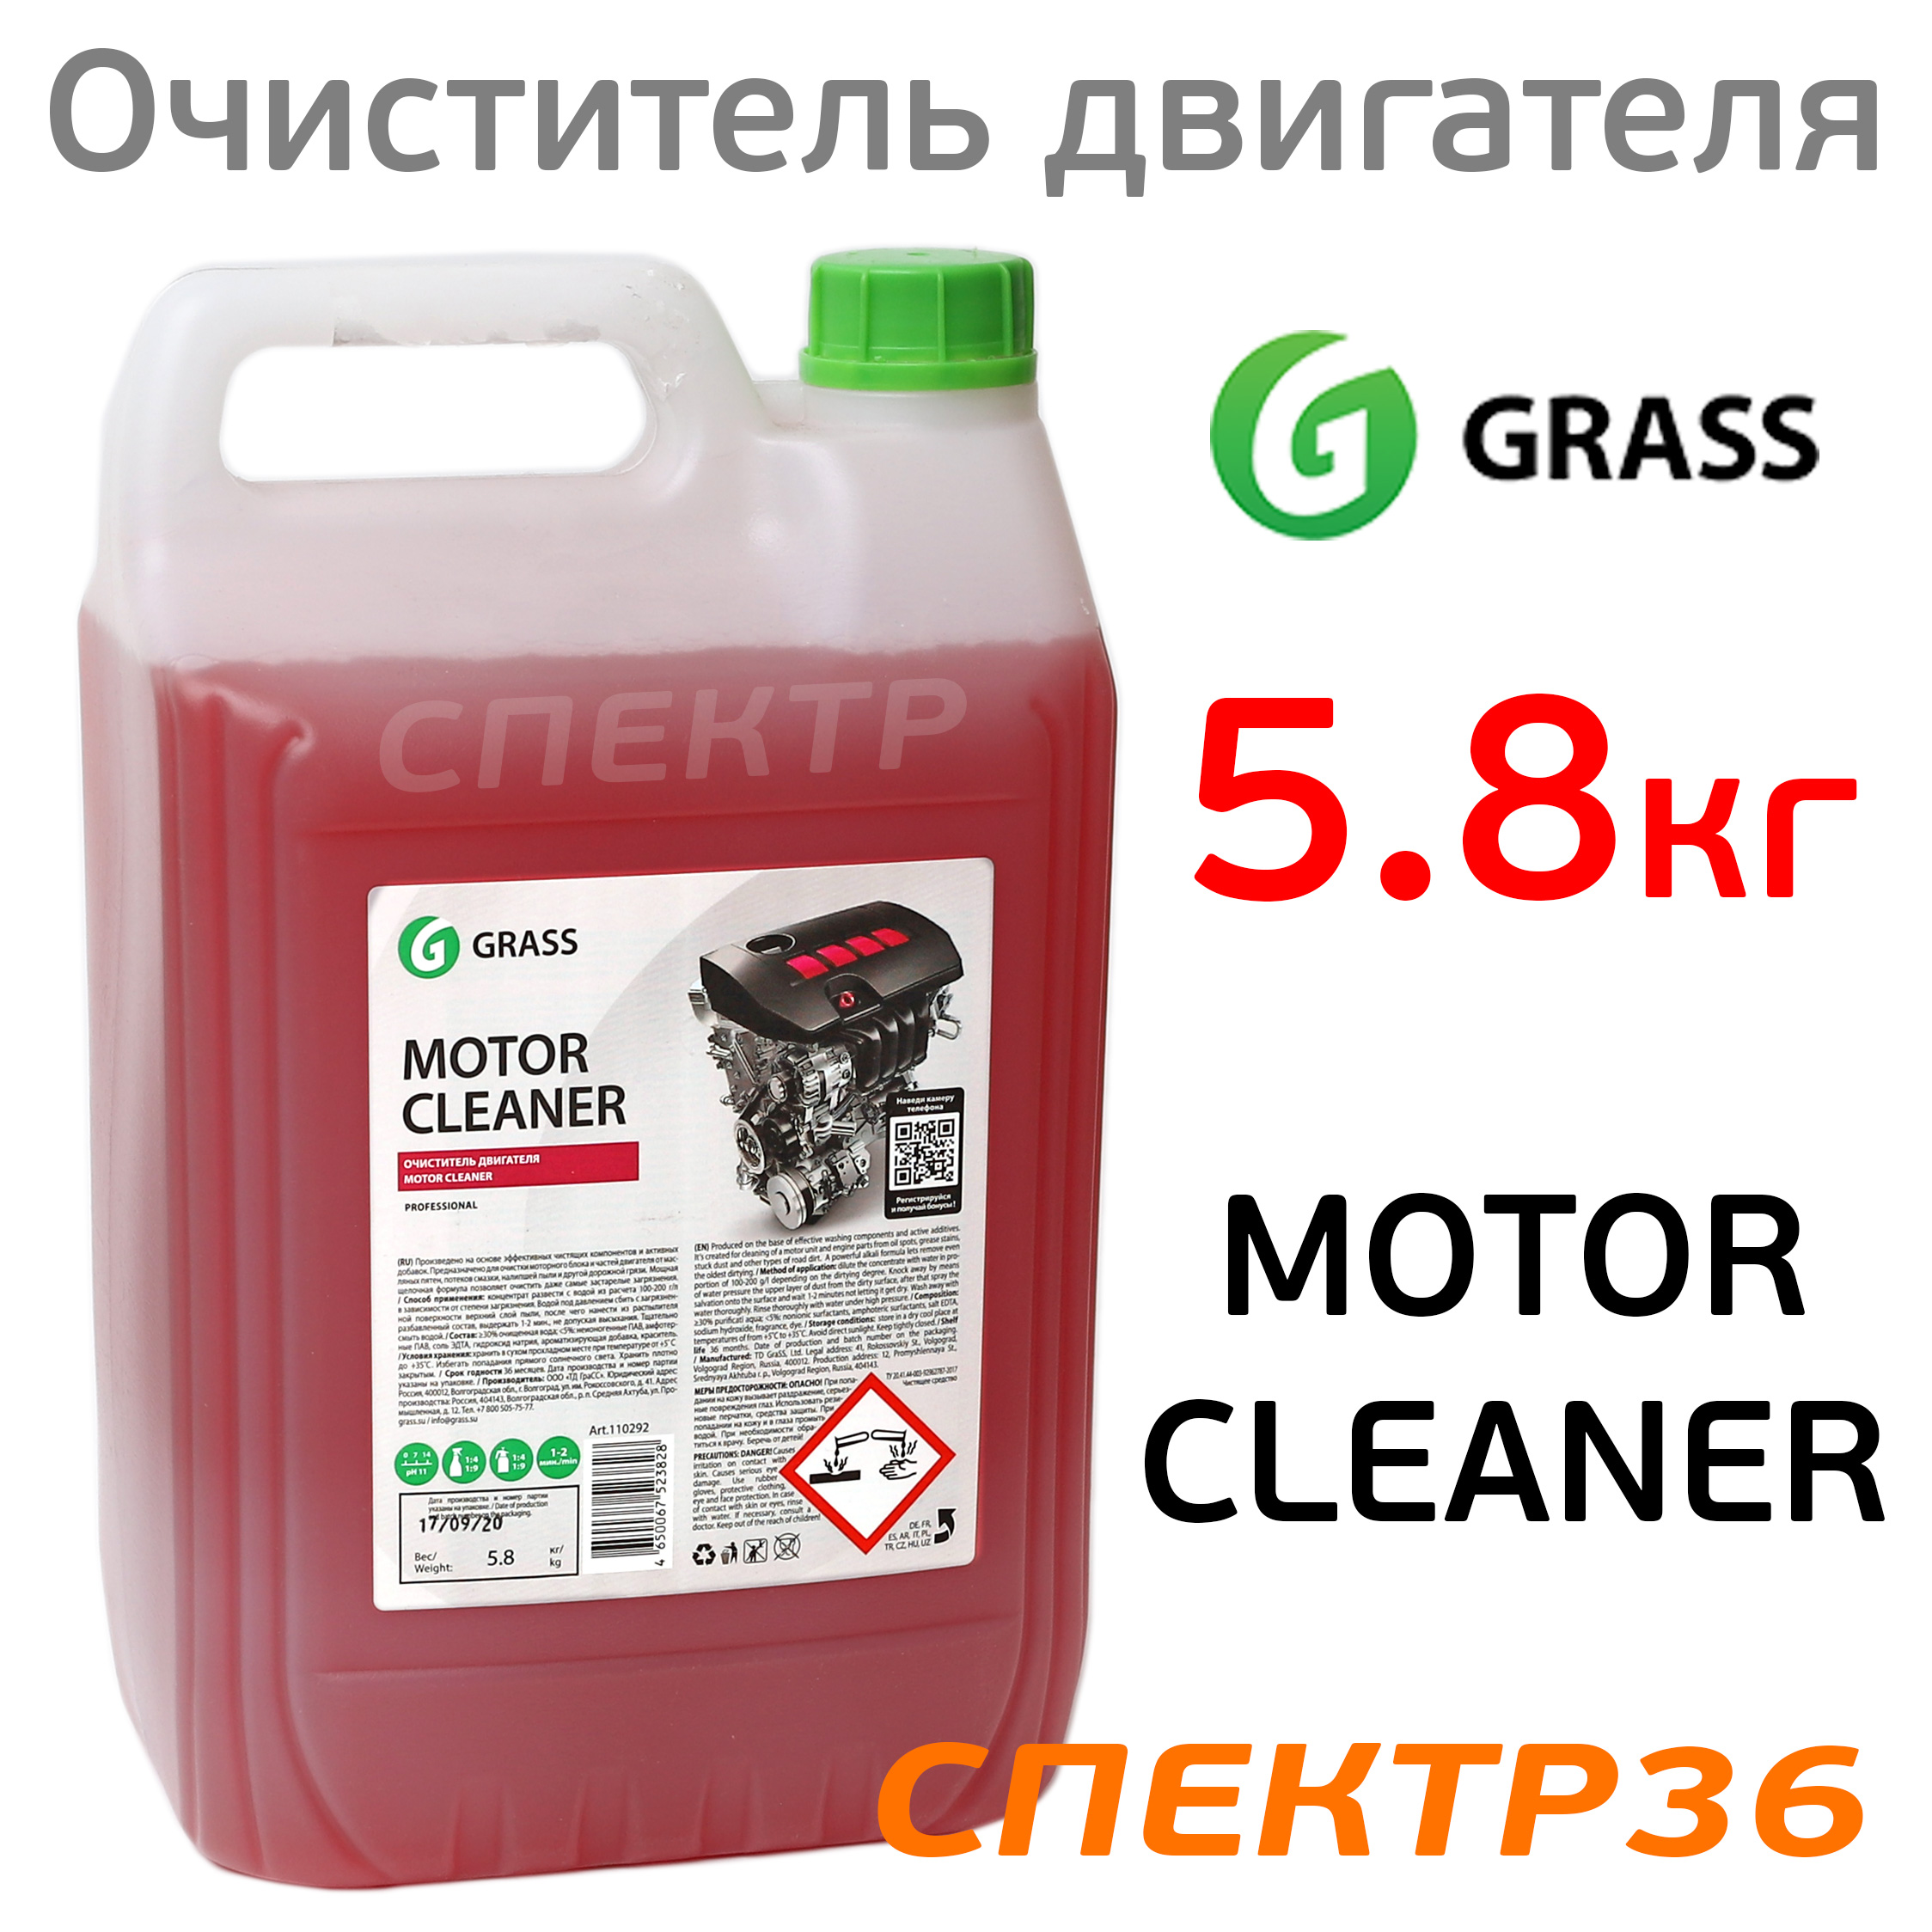  двигателя GRASS Motor Cleaner (5,8кг)